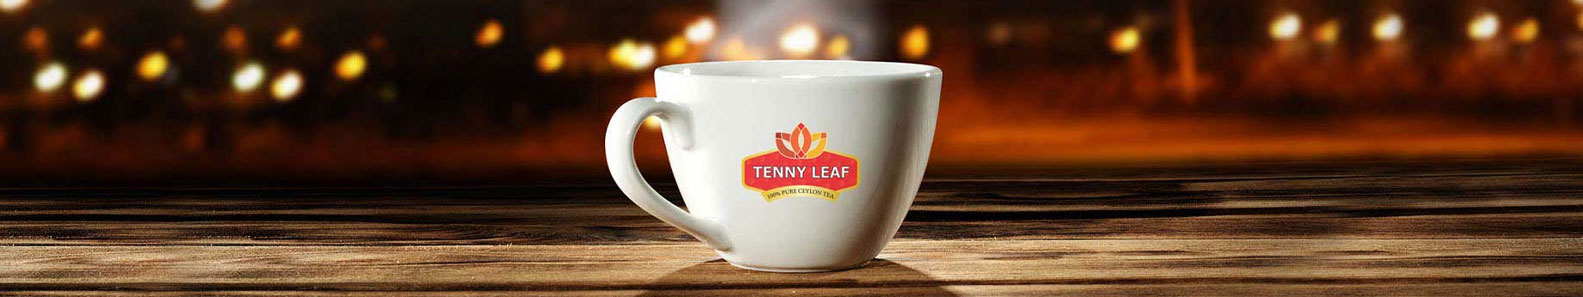 CEYLON TENNY TEA PVT LTD